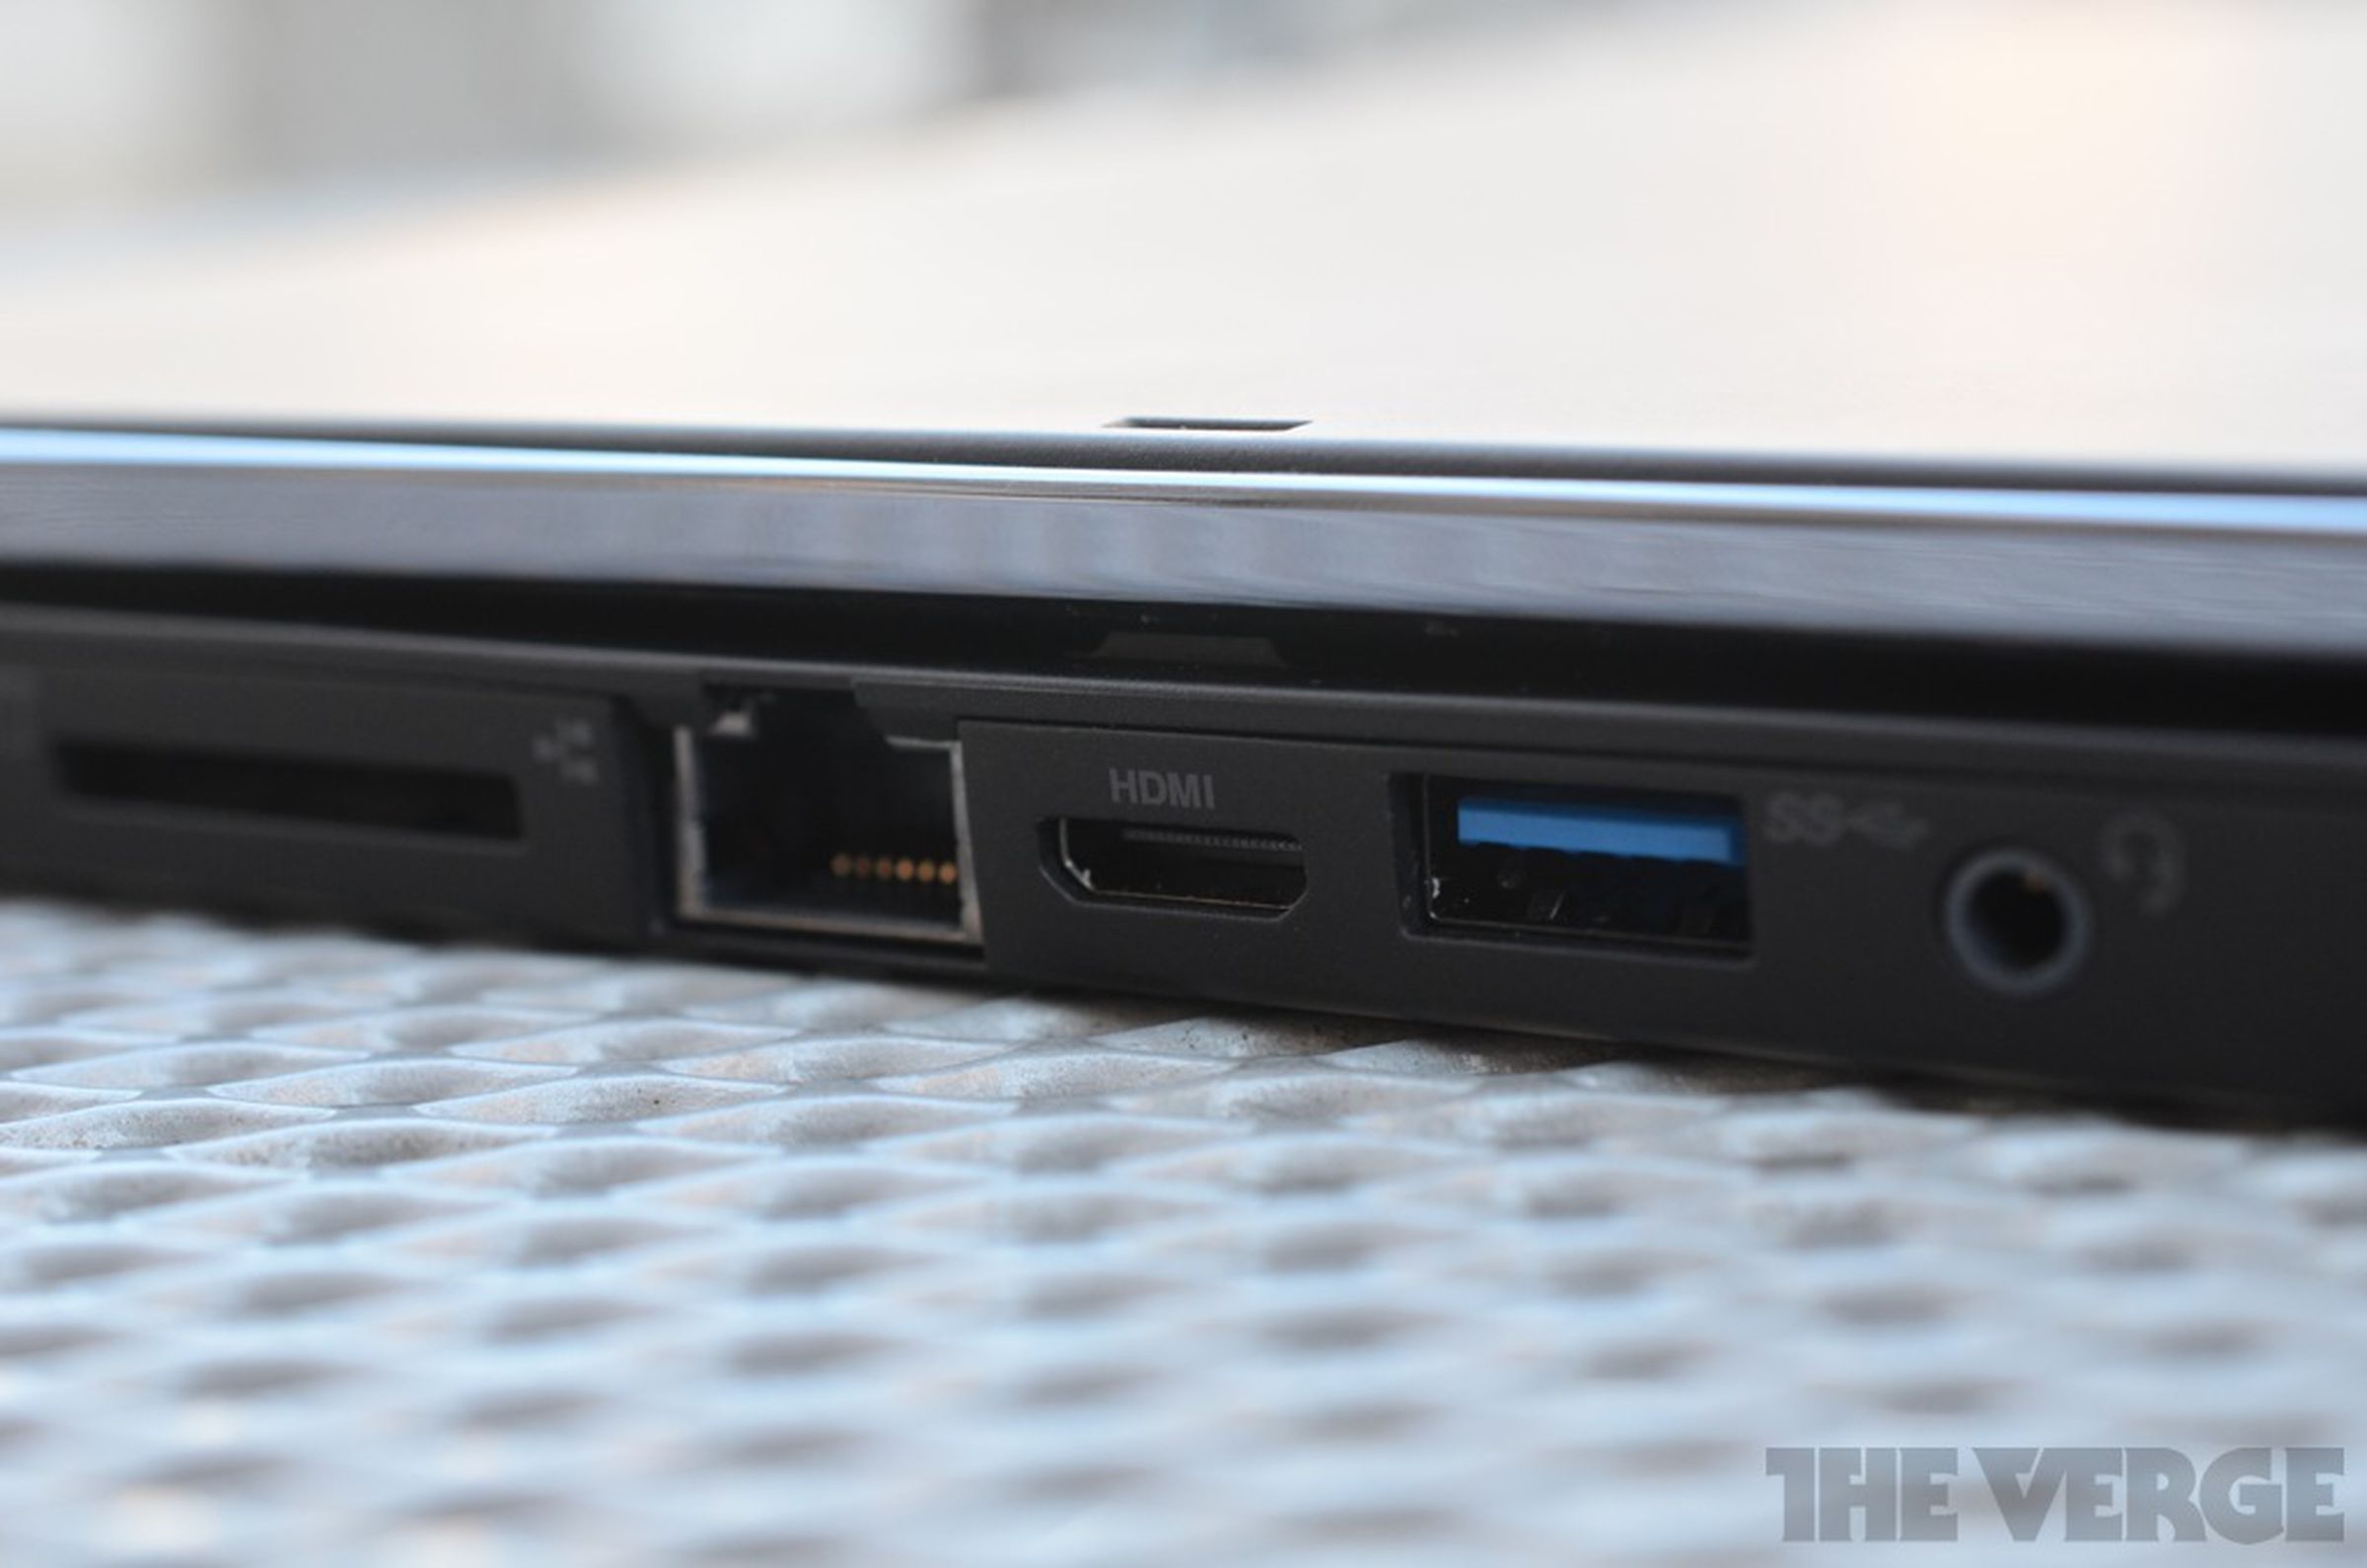 Lenovo ThinkPad Twist hands-on photos